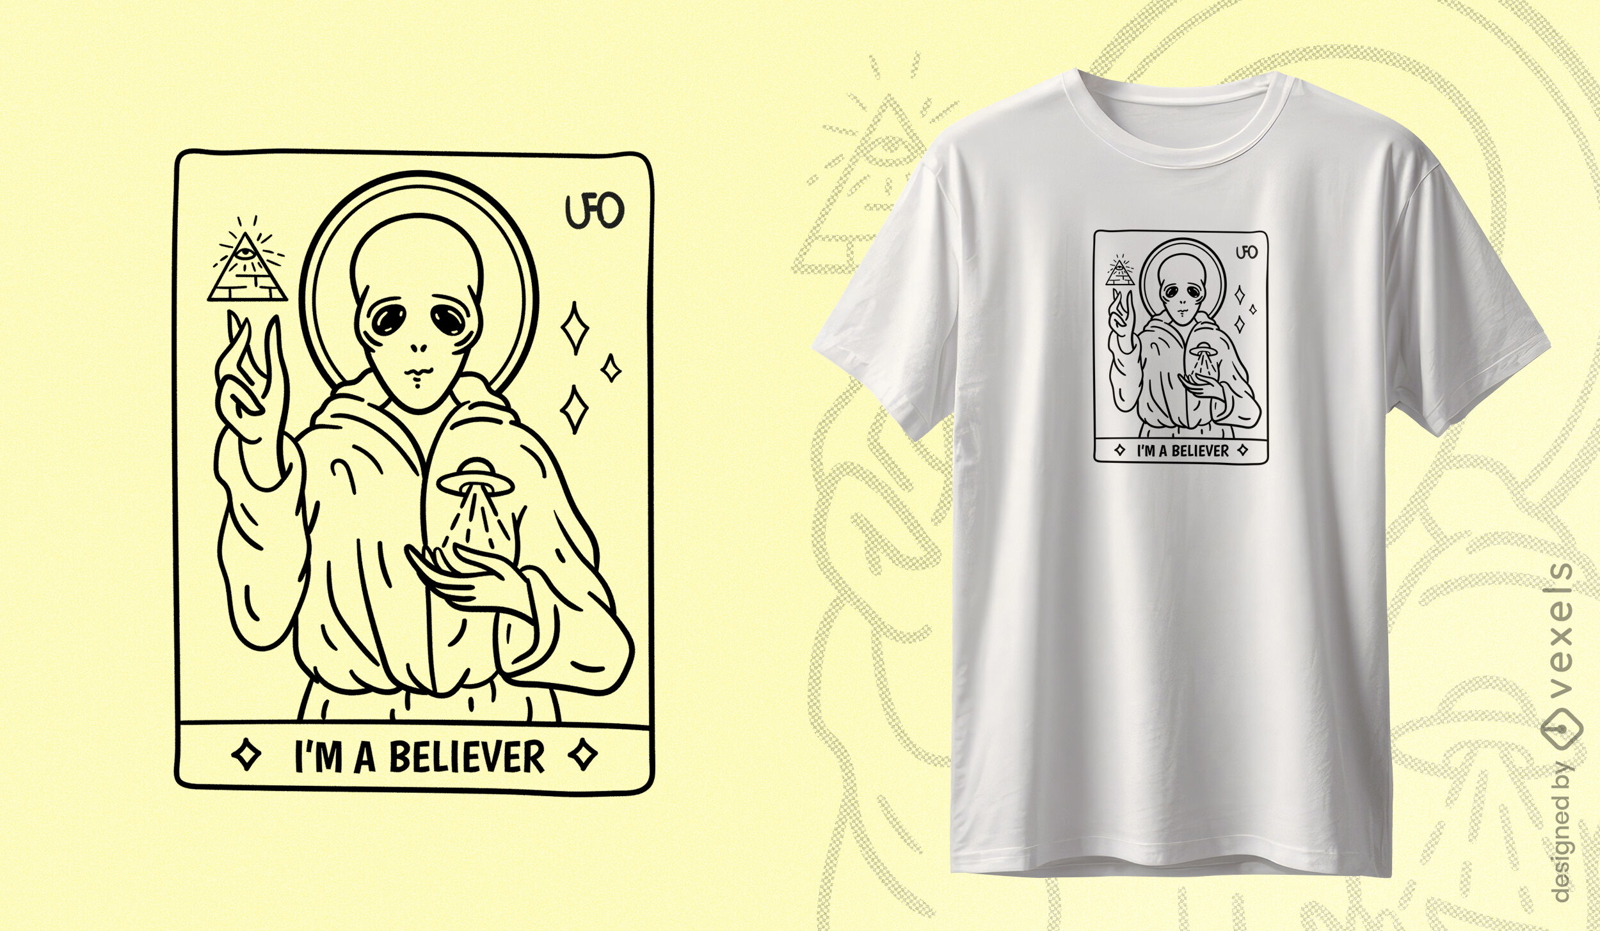 Dise?o de camiseta de creyente alien?gena.